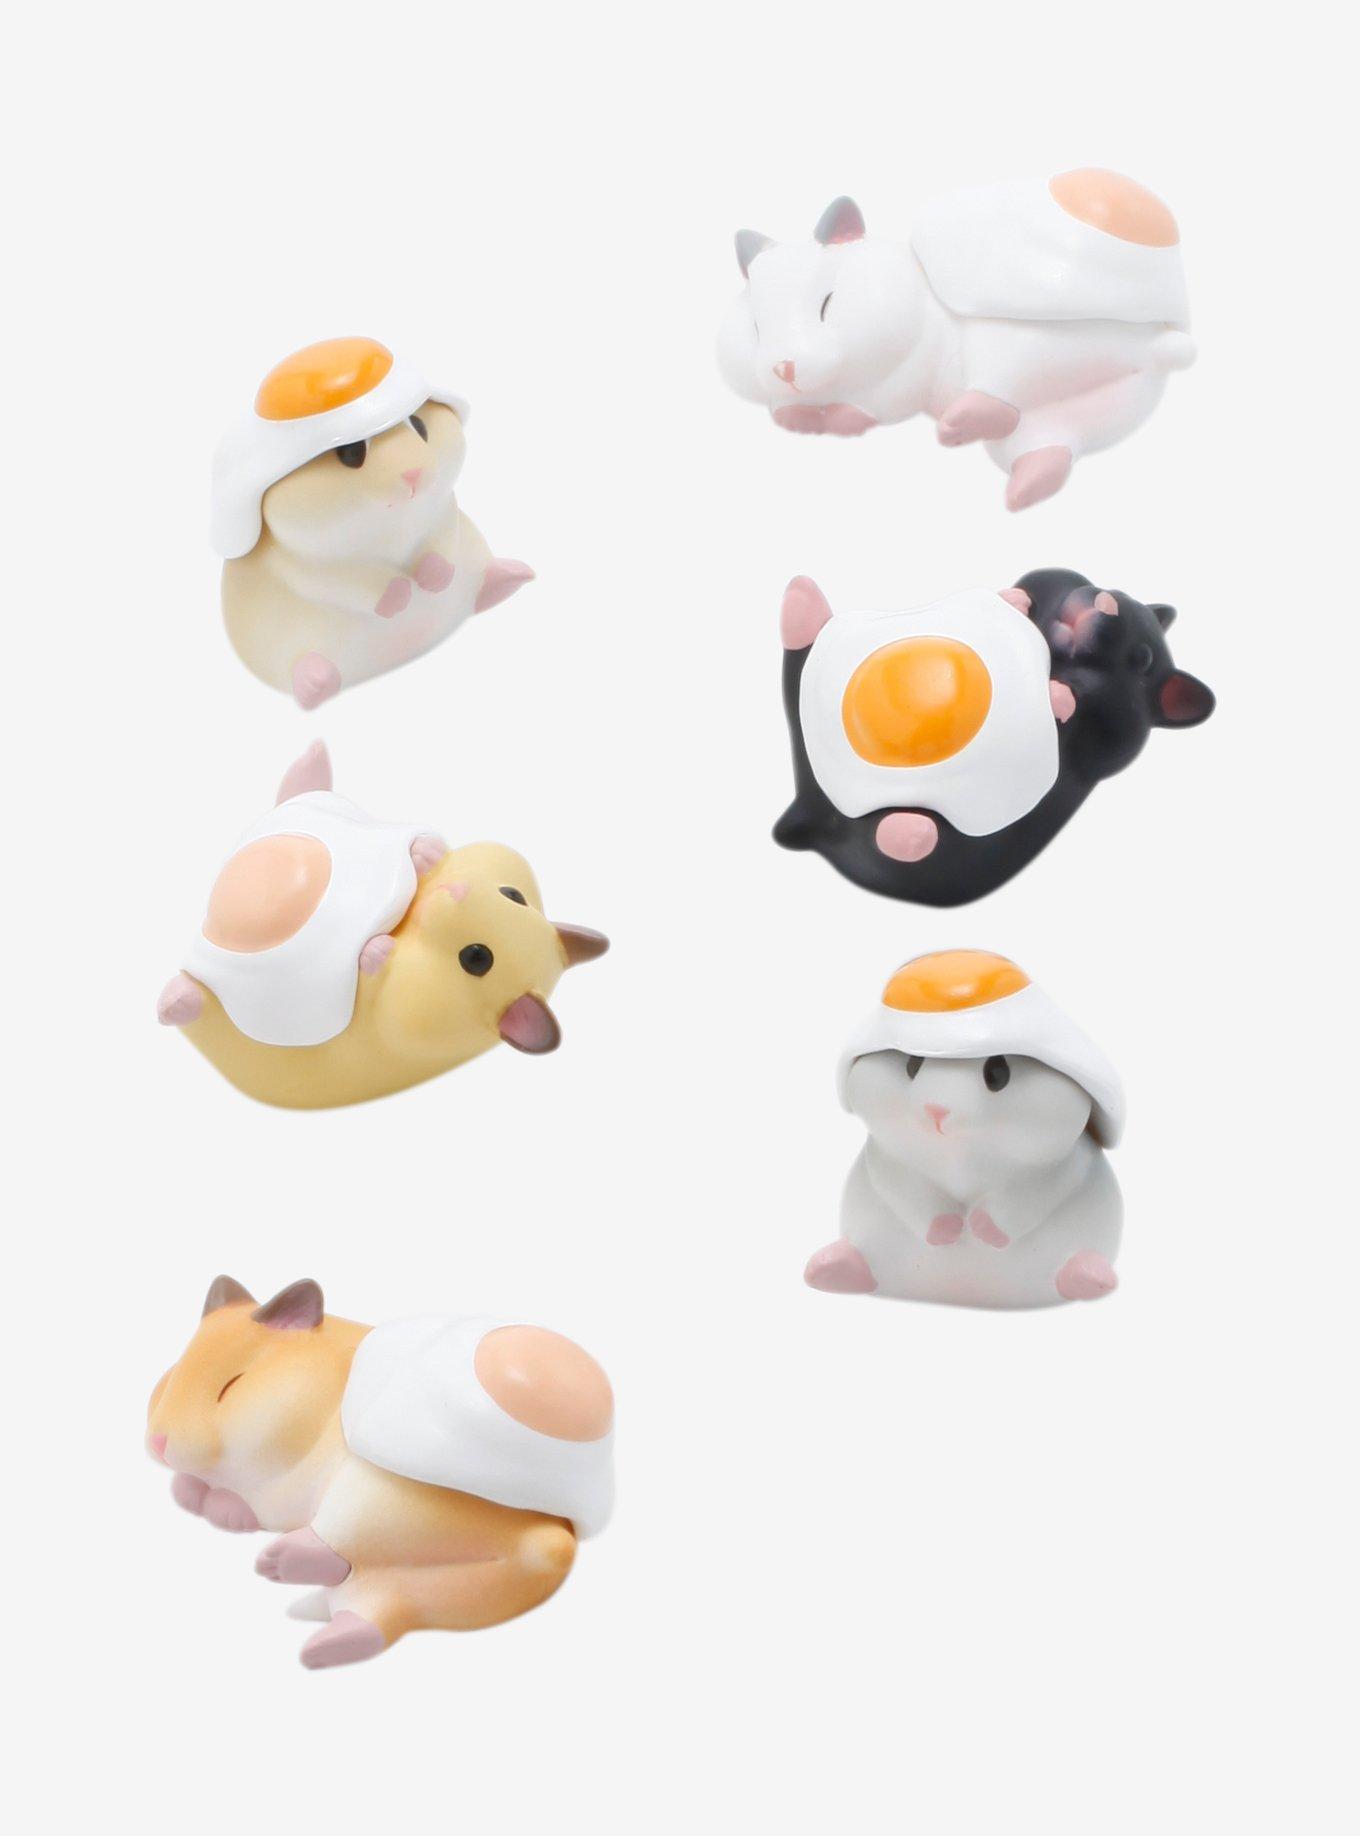 Ham Egg 2! Amazing Hamster & Egg Surprise Box – Kawaii Gifts